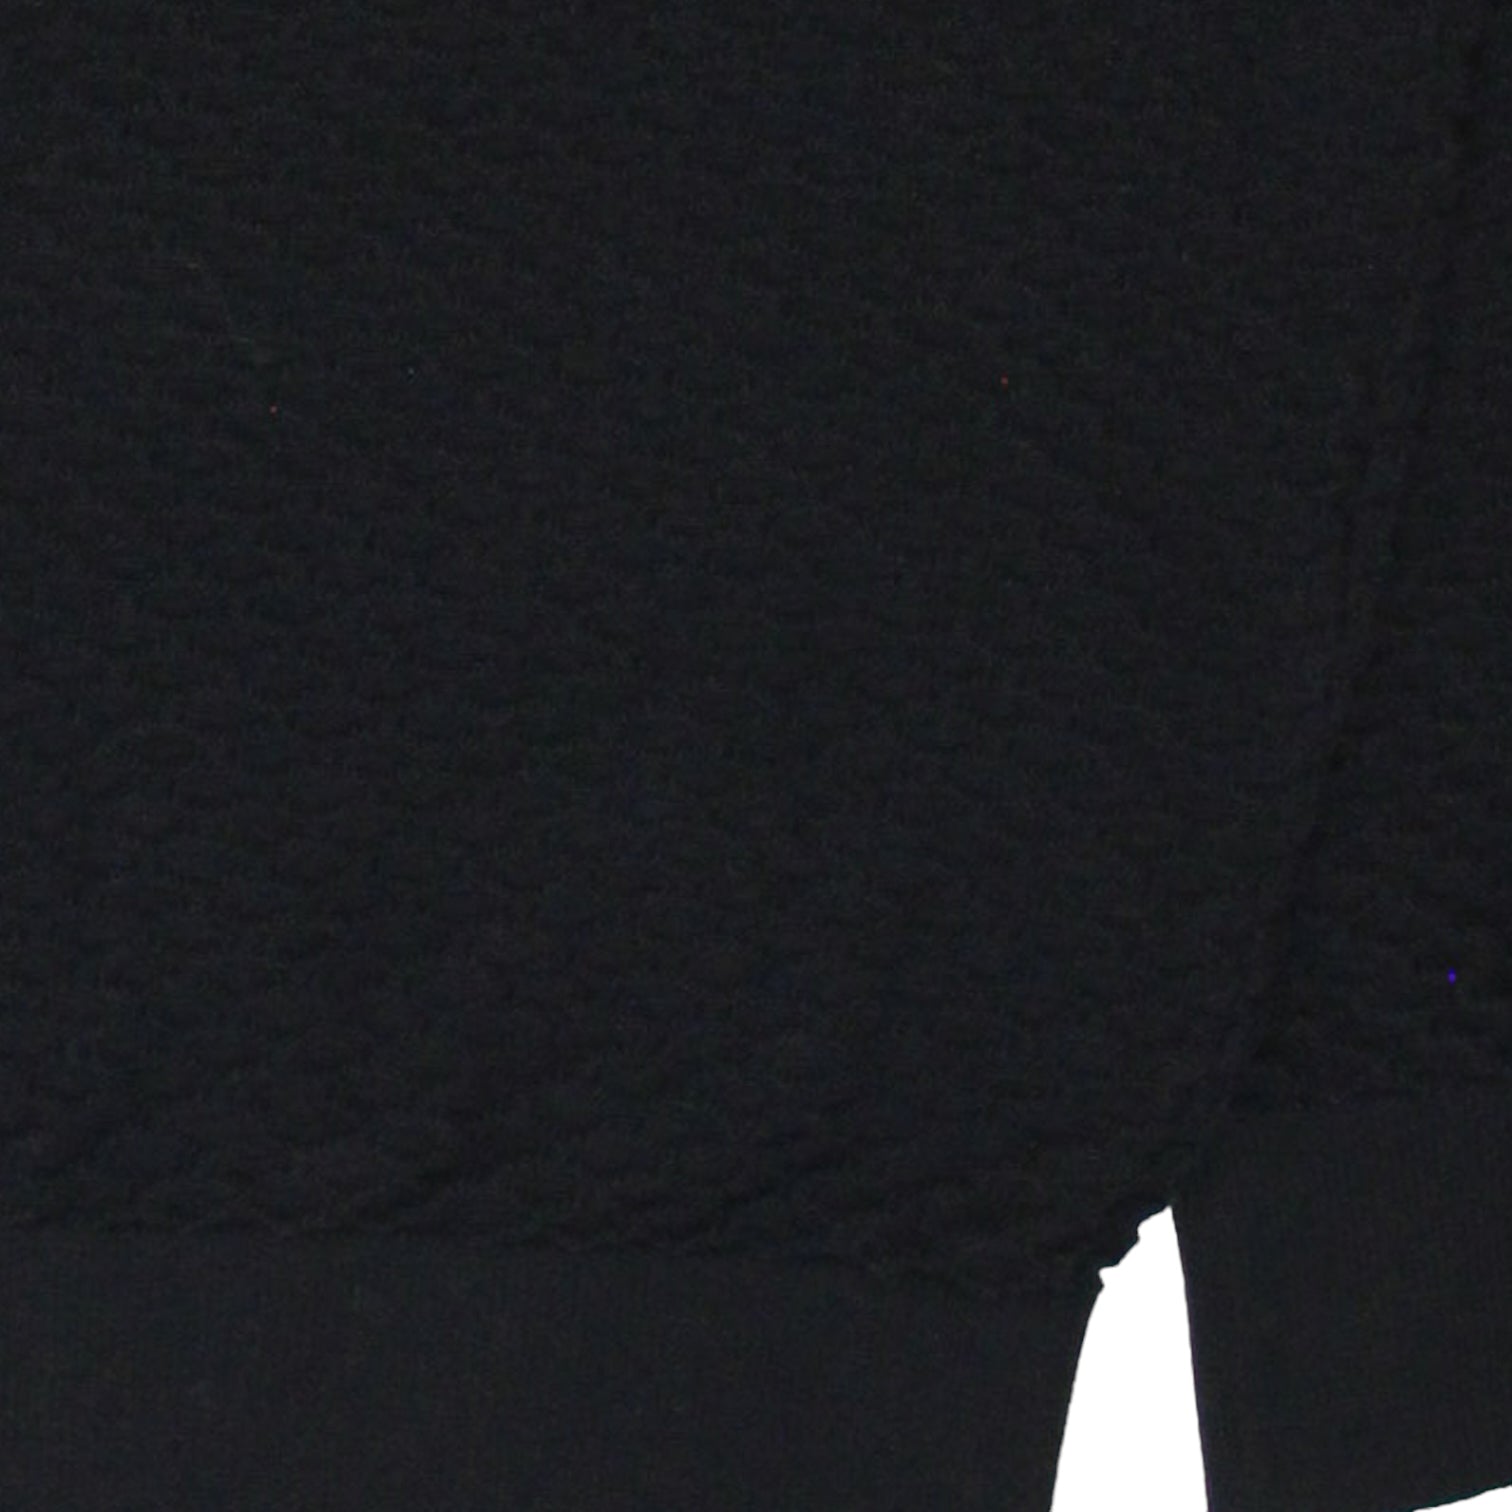 Calvin Klein Black Texture Crew Neck Sweater